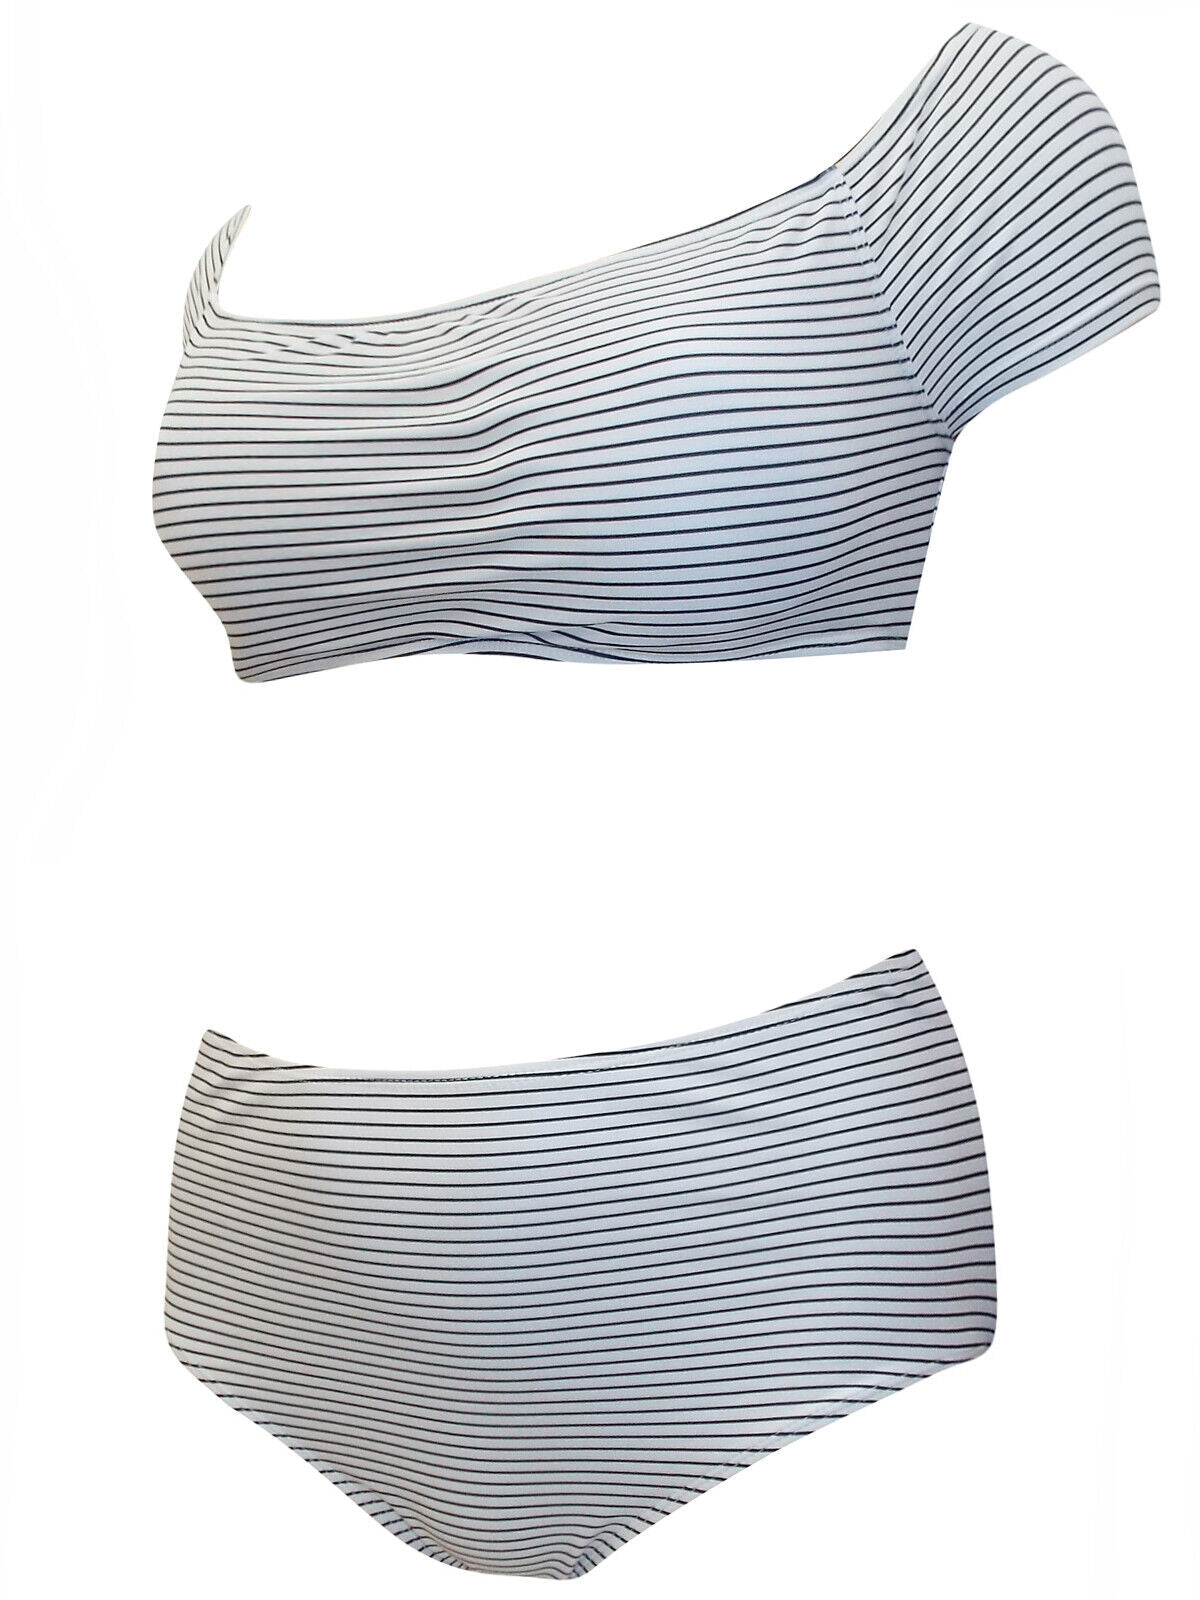 New Boohoo Black/White Striped Bardot High Waist Bikini Set Plus Sizes 16-24